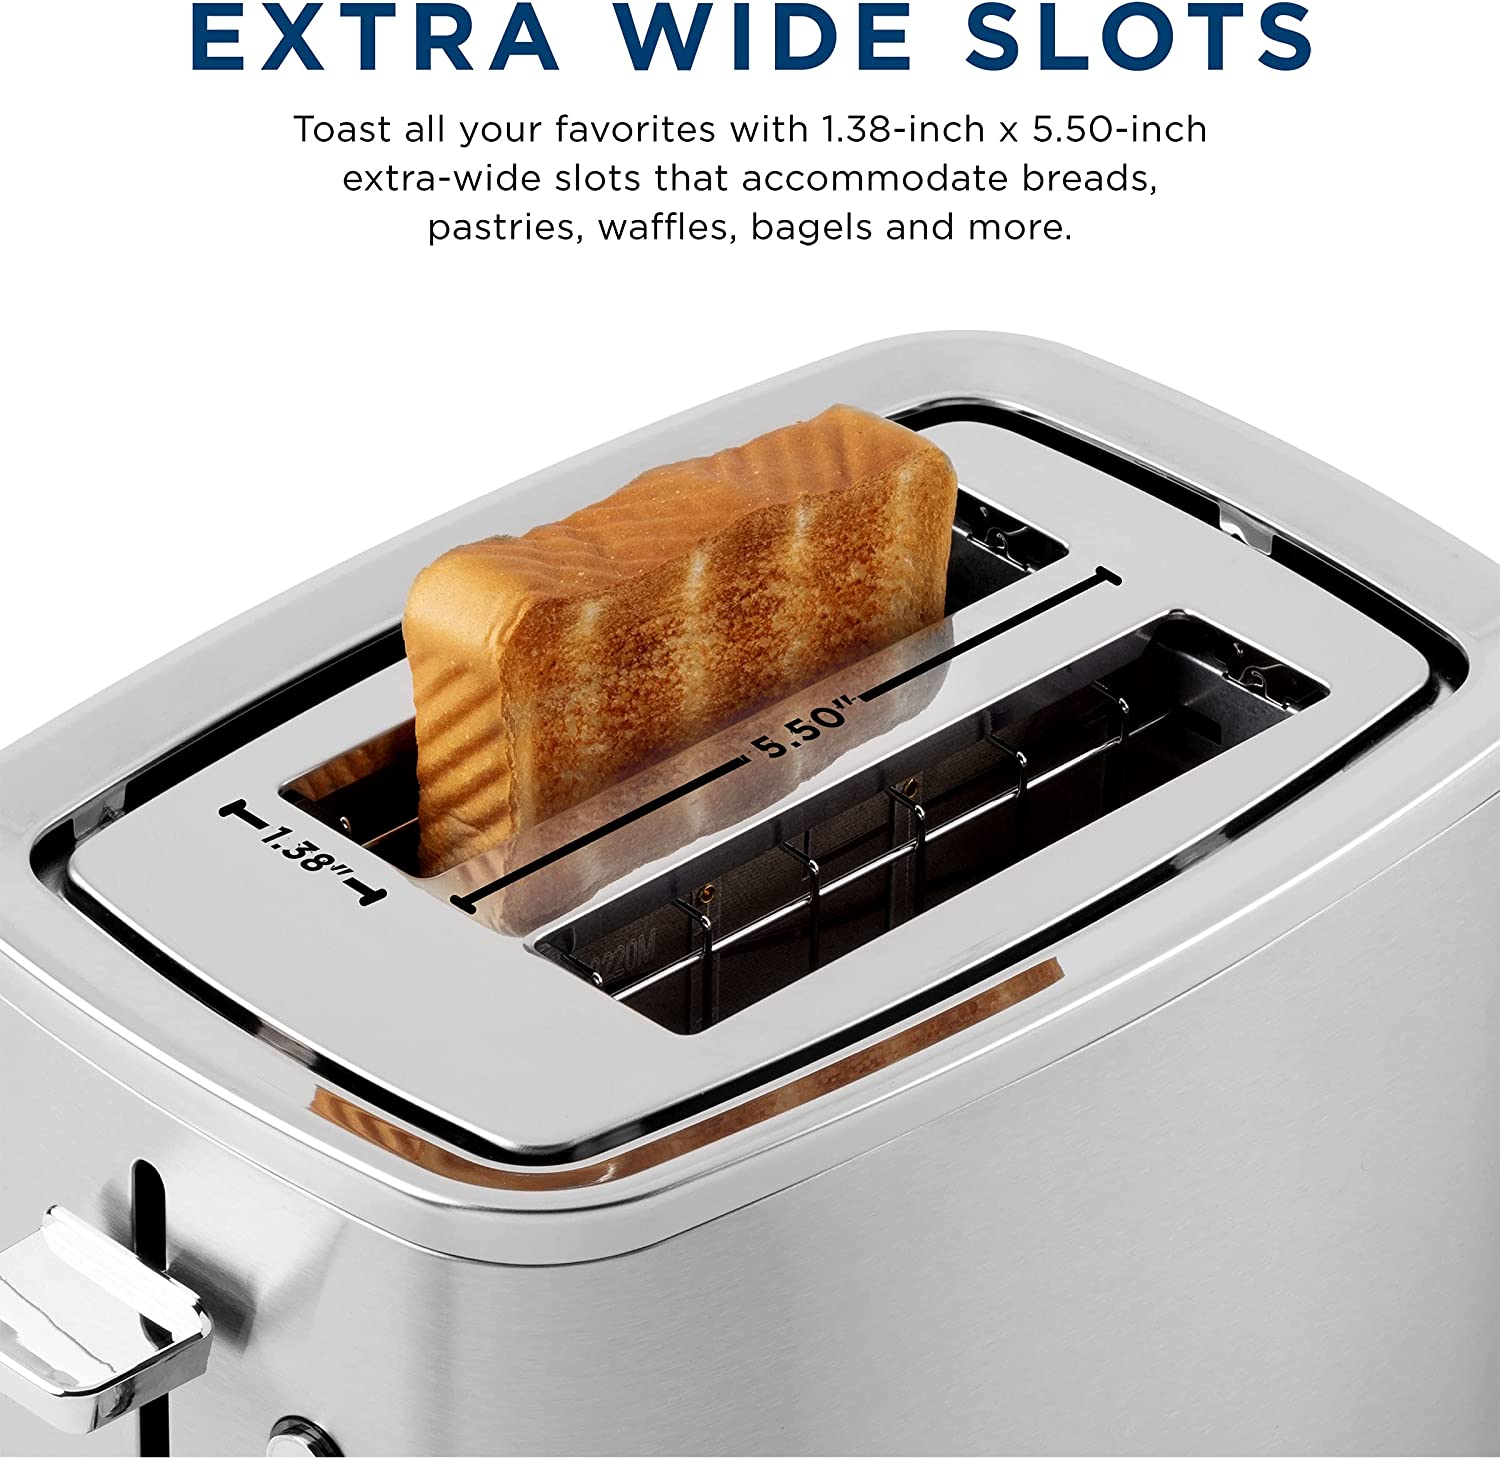 GE - 2-Slice Toaster - Stainless Steel